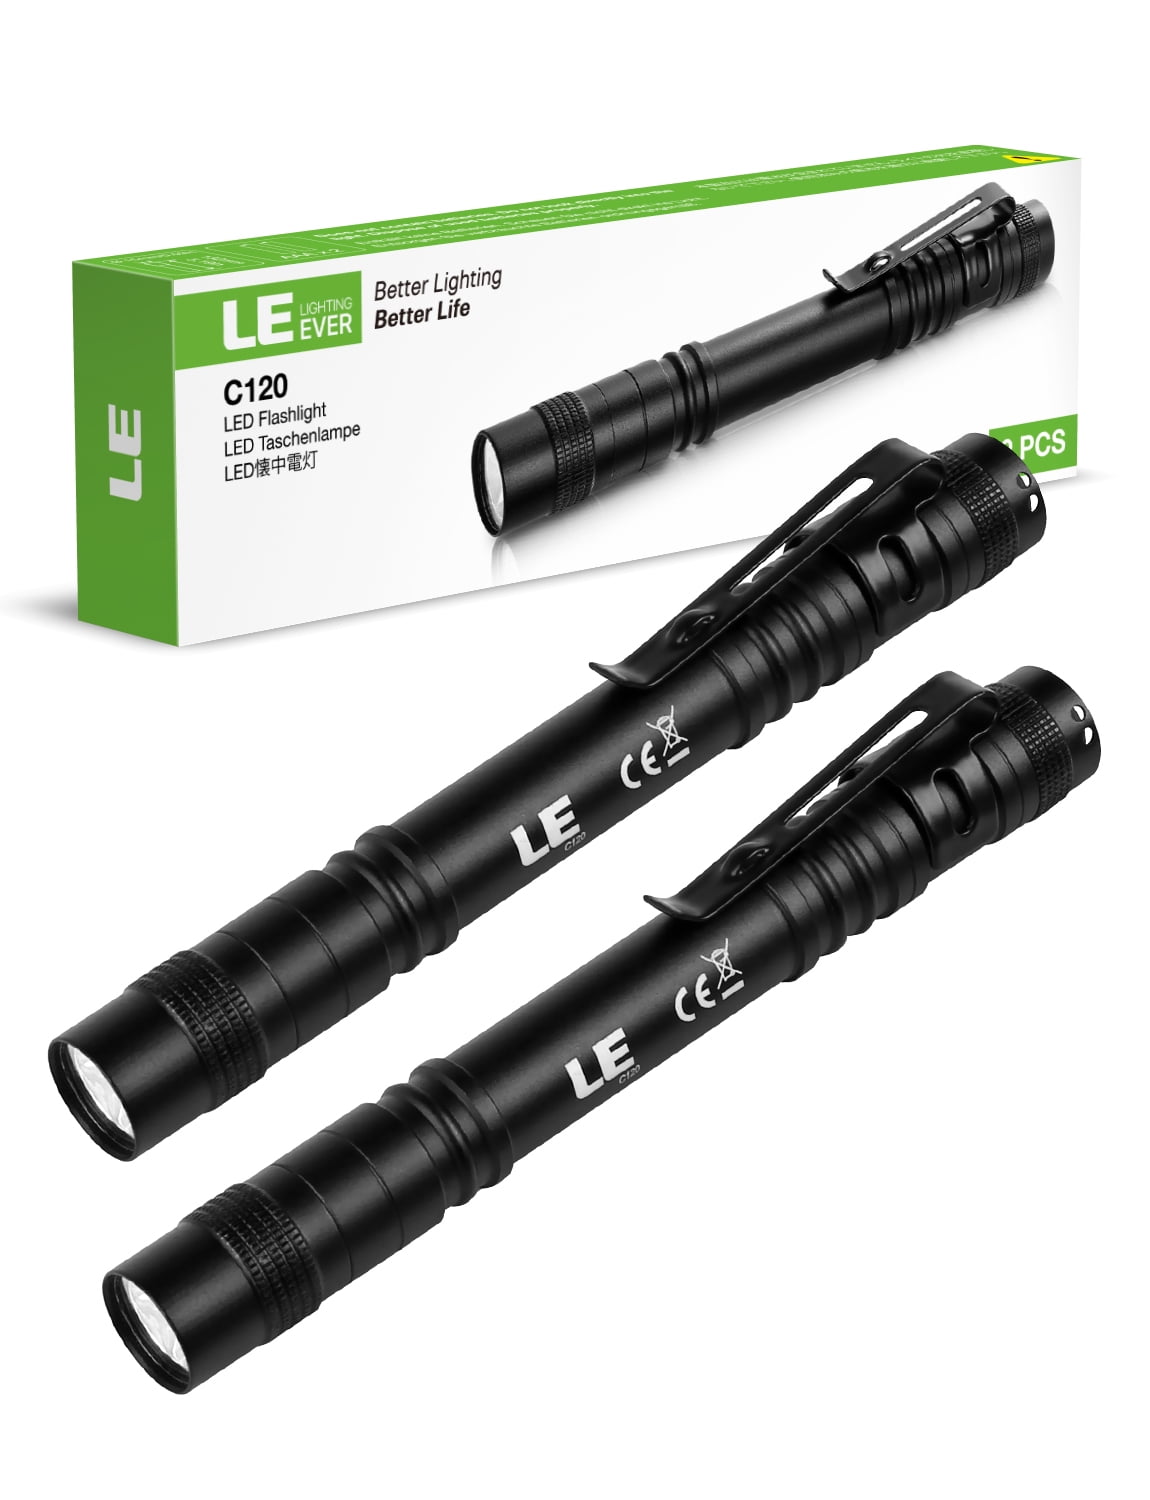 COB LED Pen Light IPX5 USB Rechargeable Work Torch Inspection Flashlight  Lamp